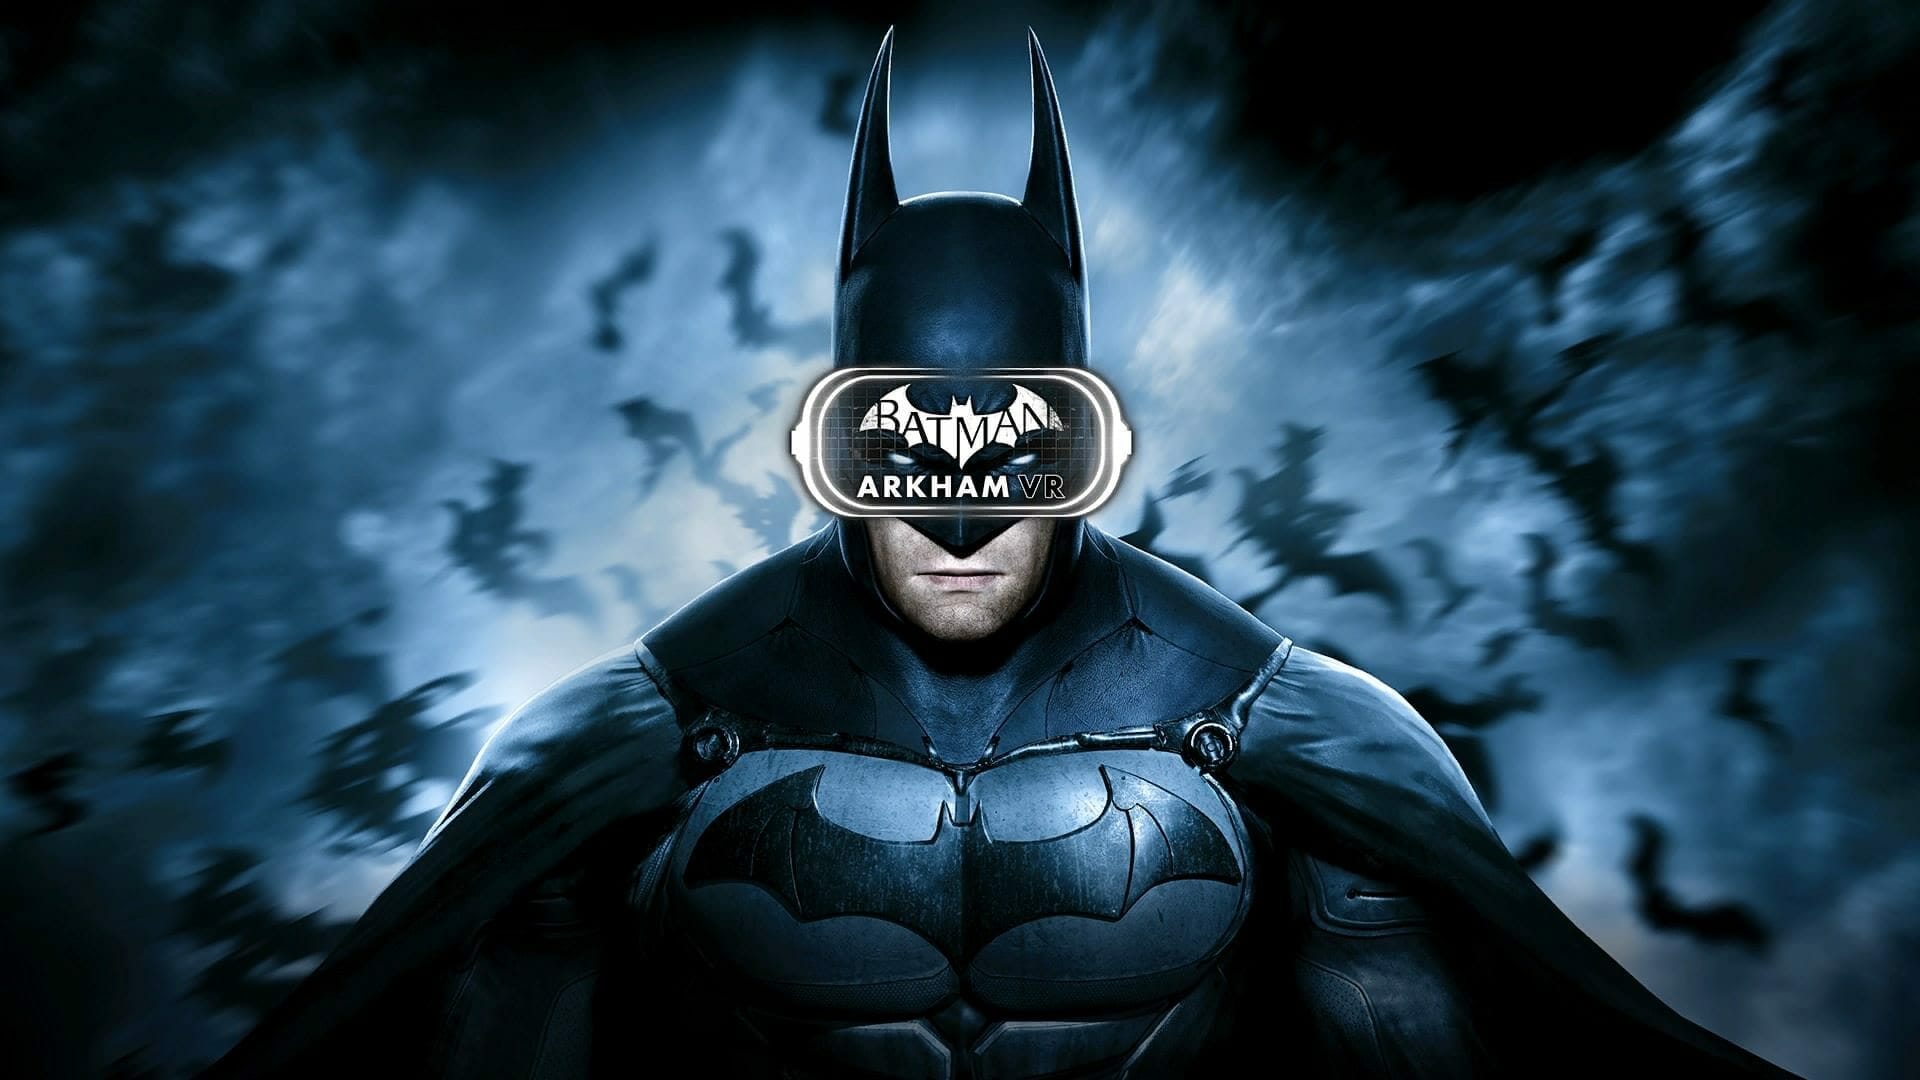 Batman Arkham VR System Requirements and Release Details - TheNerdMag